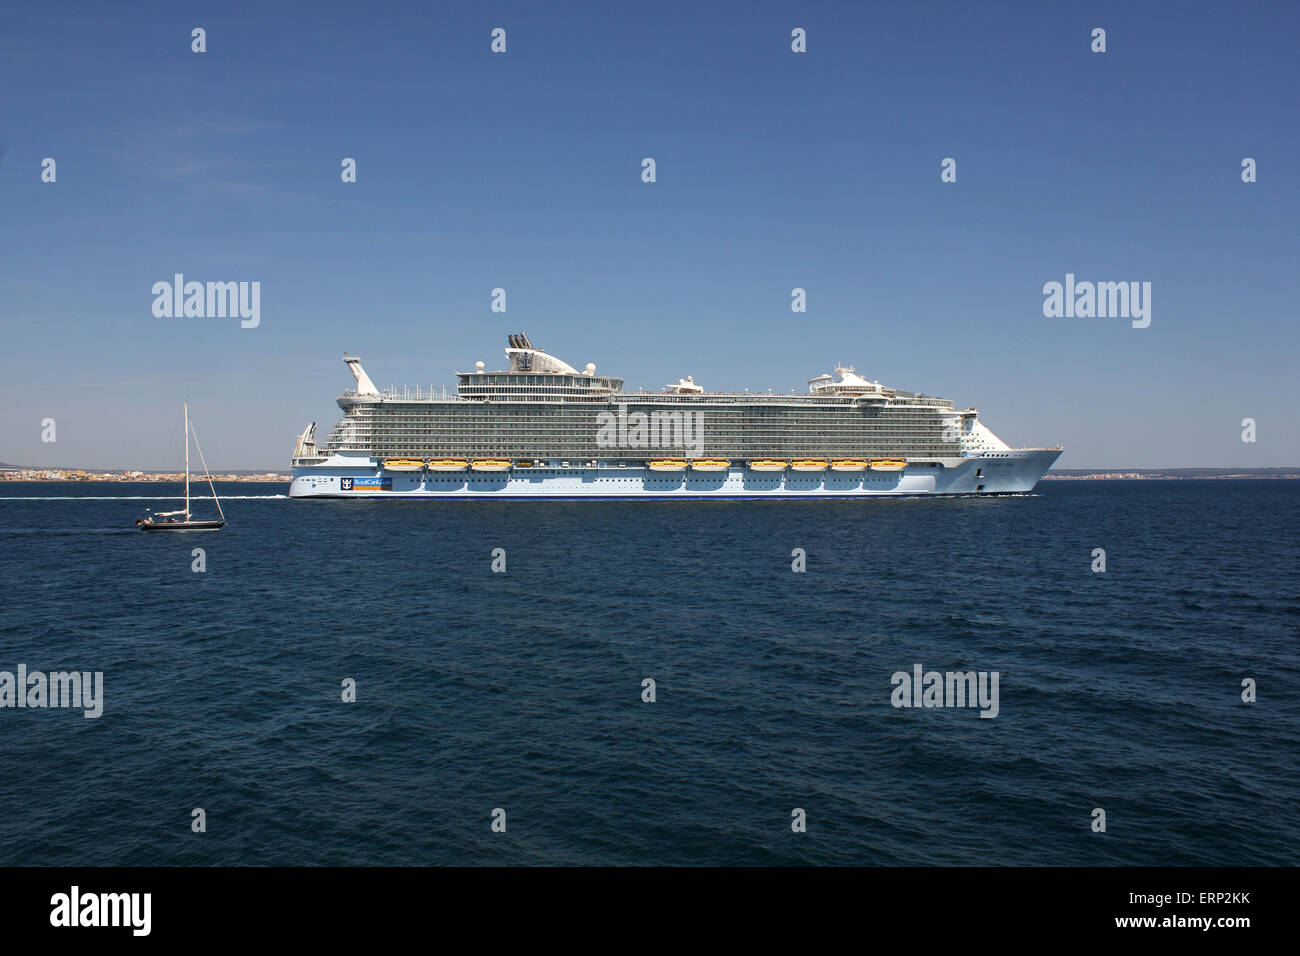 Mega Cruise ship “ALLURE OF THE SEAS” (360 mtrs long, launched 2010, 6296 passengers, 2384 crew ) - Palma de Mallorca. Stock Photo